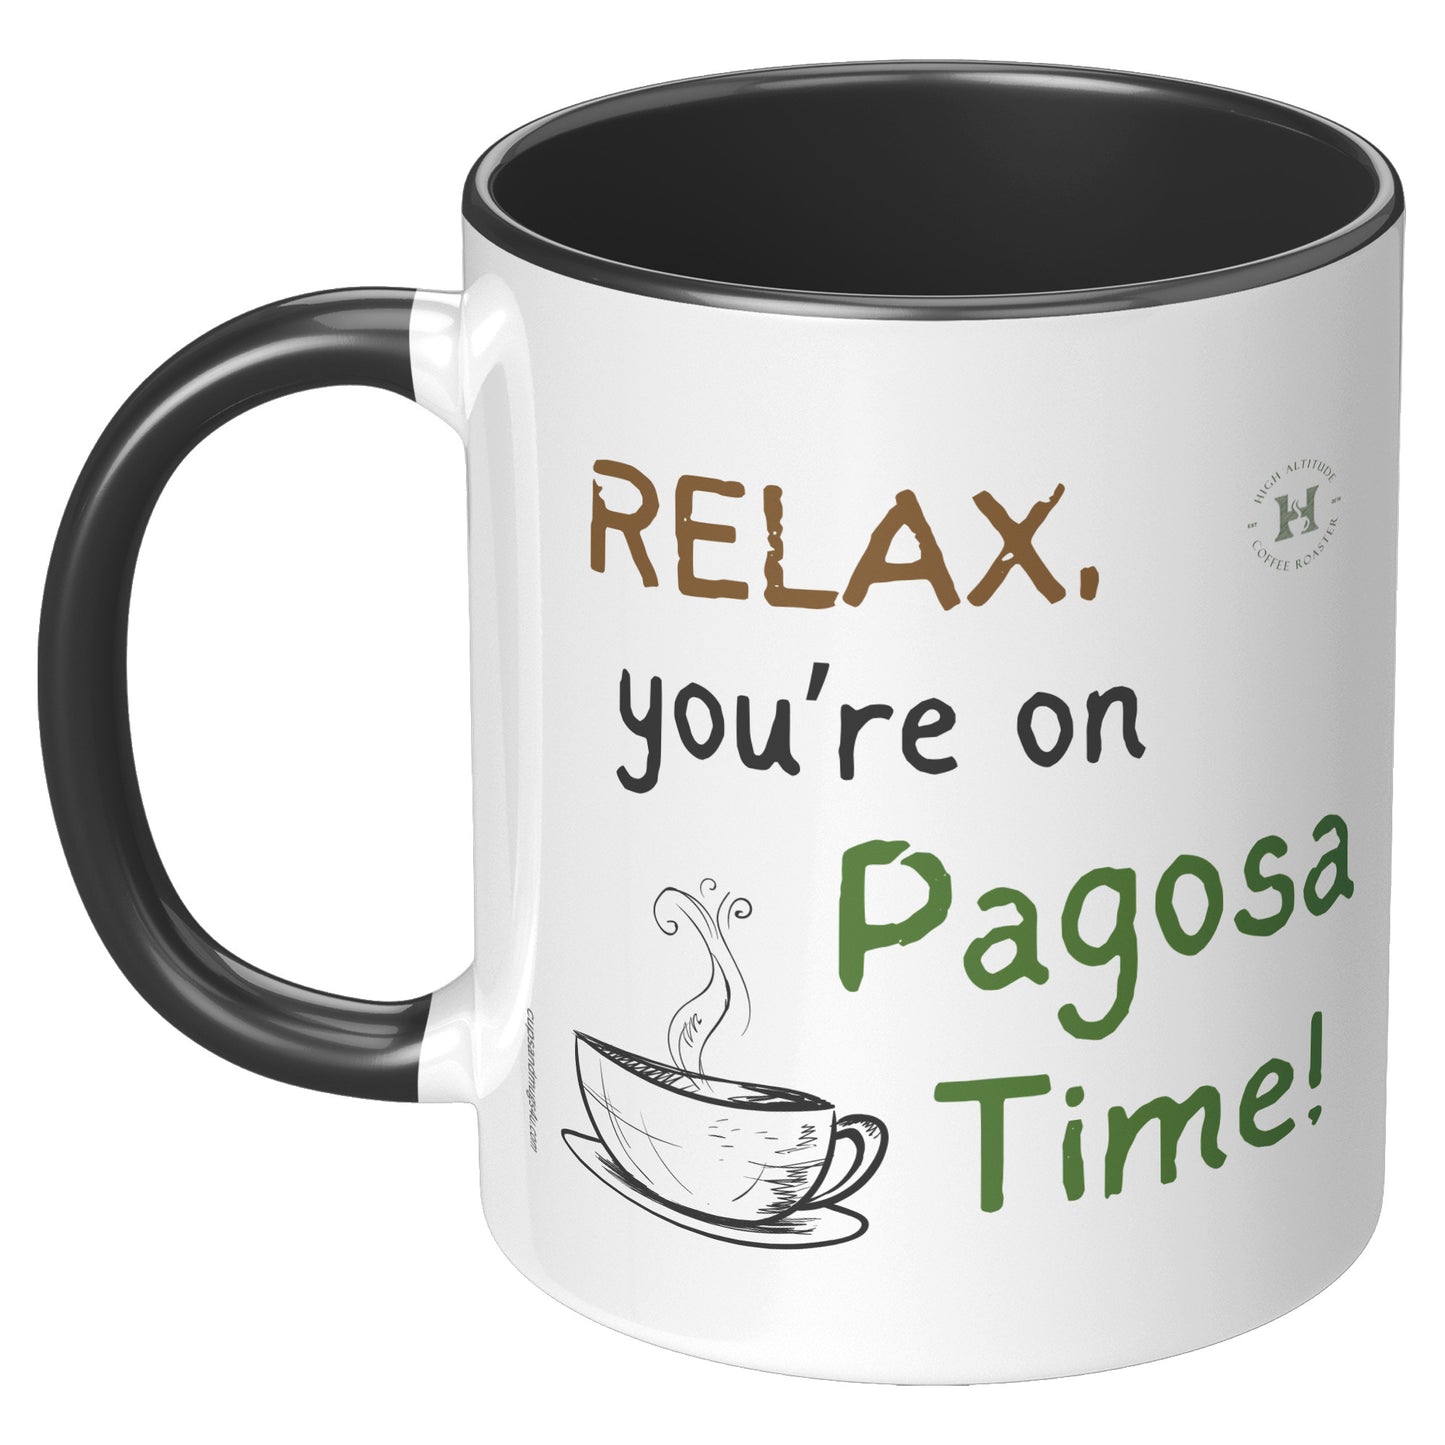 Pagosa Time, locals saying for Pagosa Springs, 11oz Accent Mug Gift